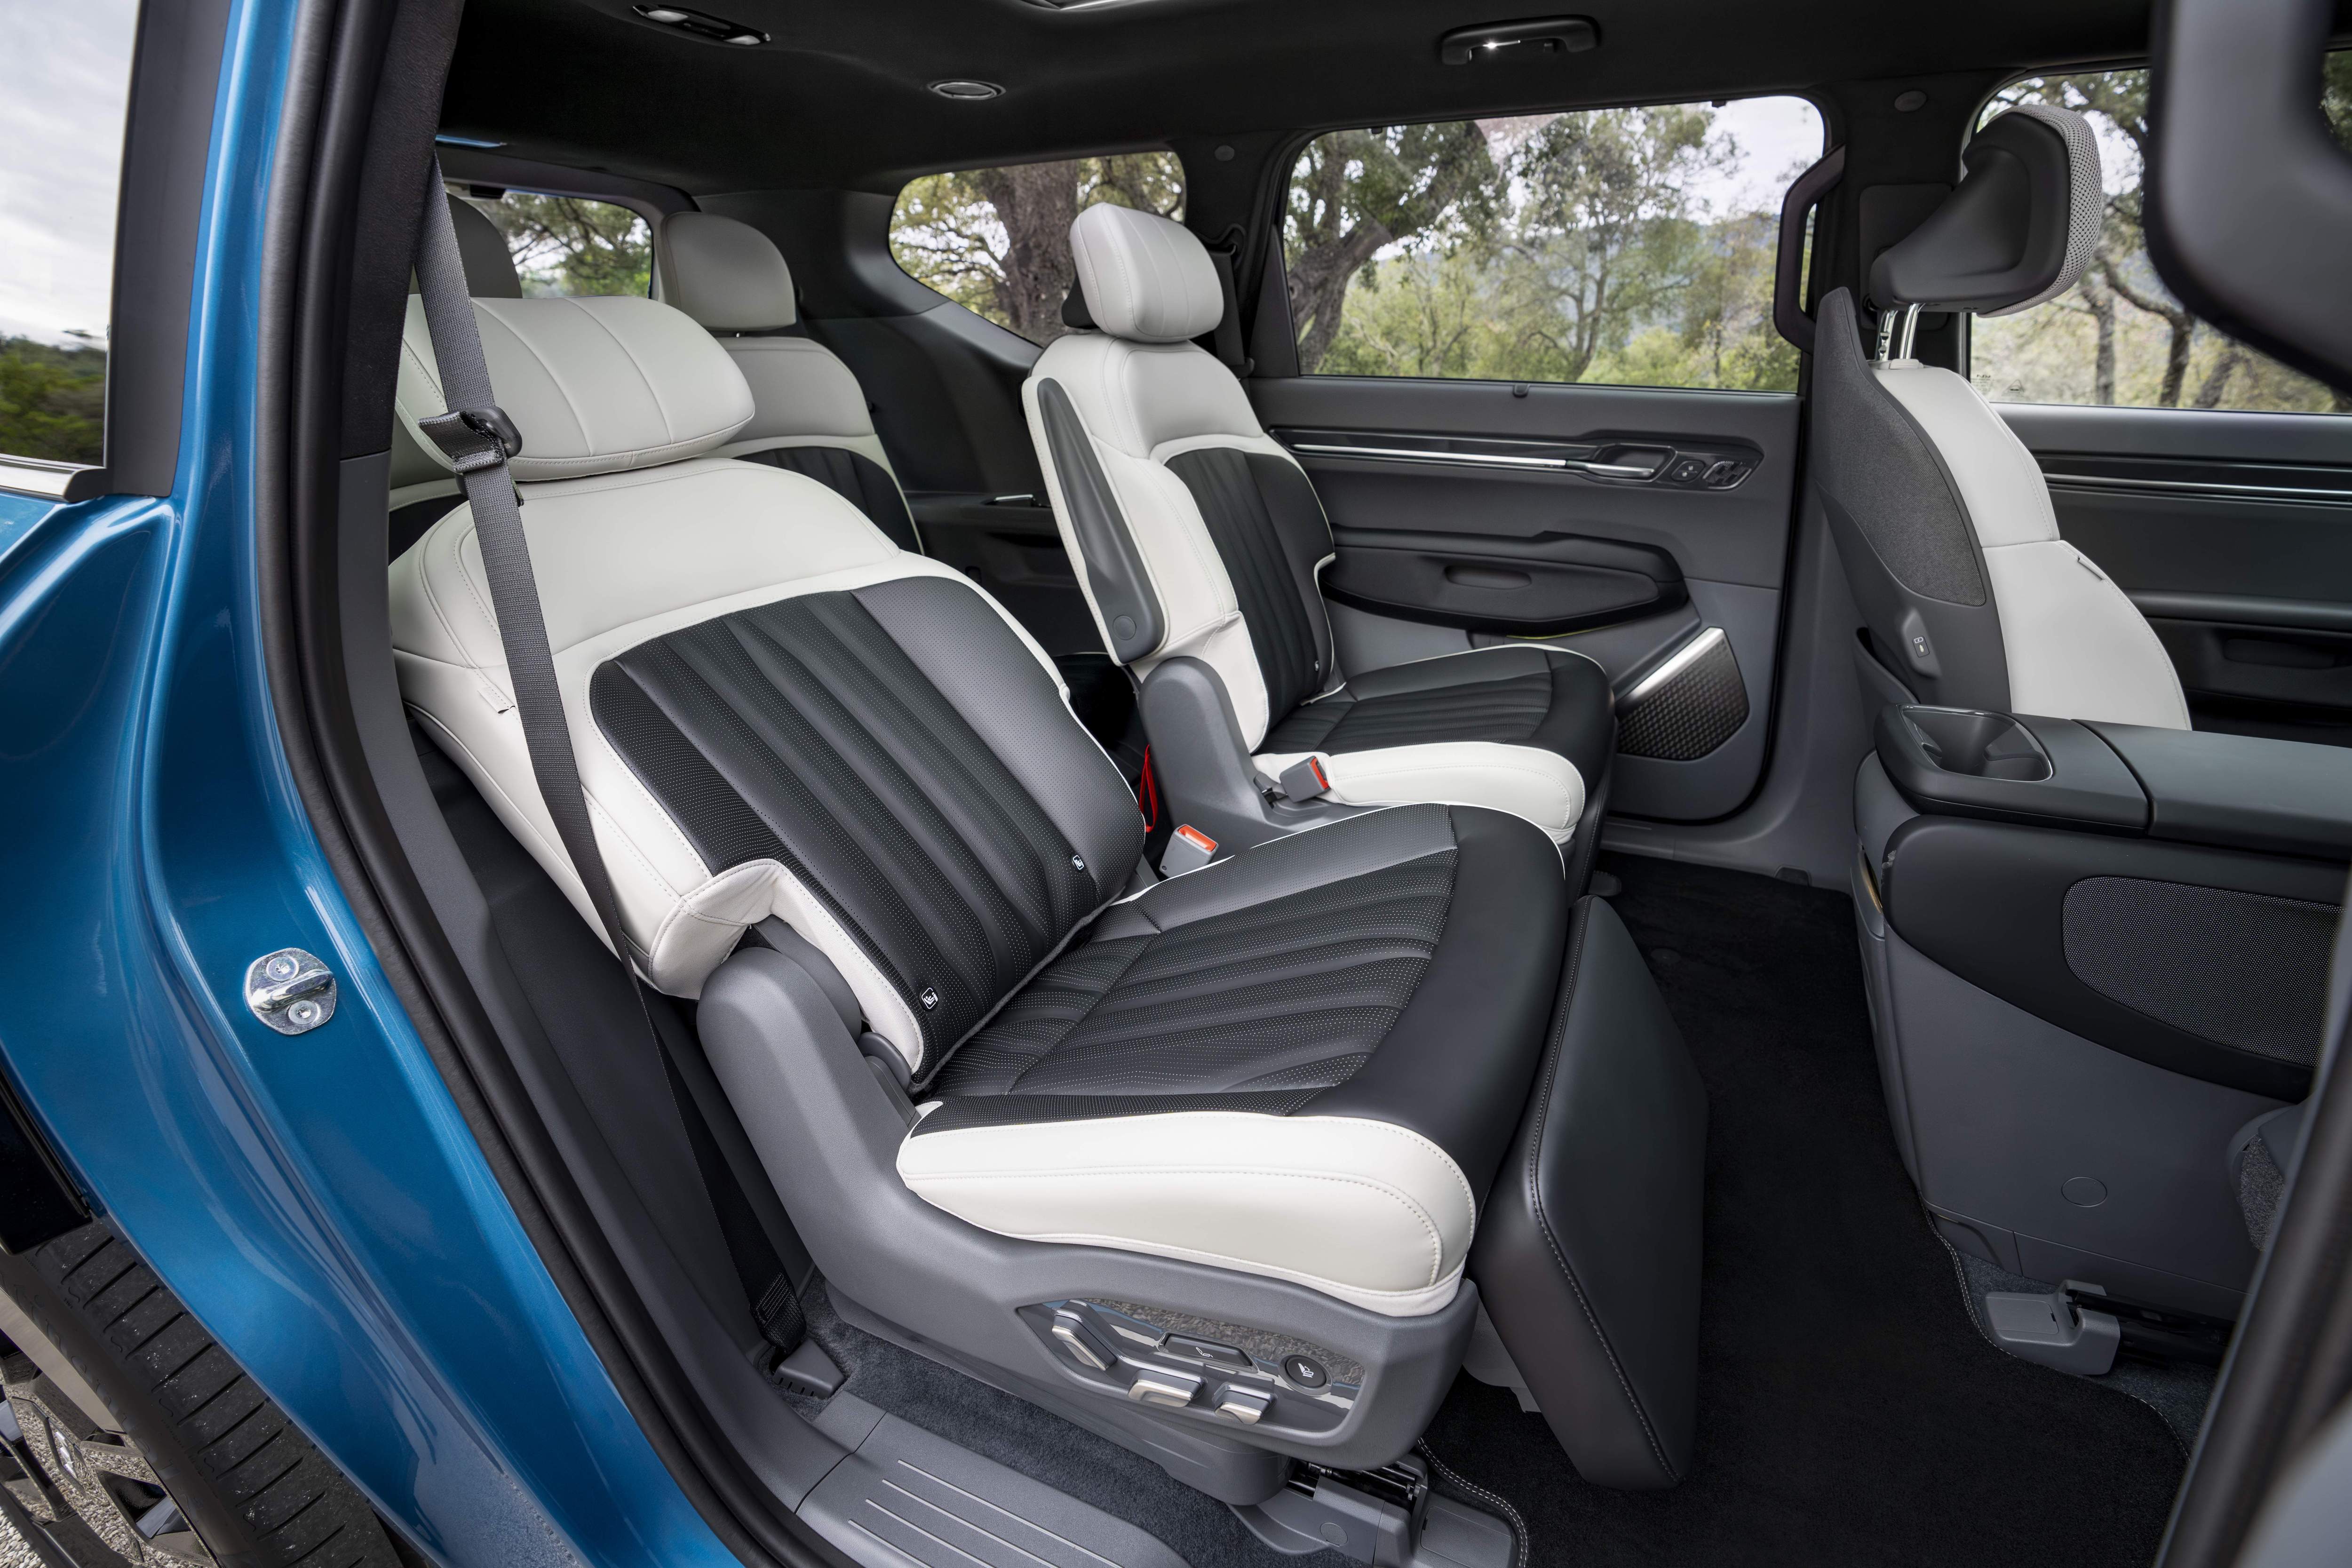 KIA EV9 gtline interior 6 seater relaxation hires 023